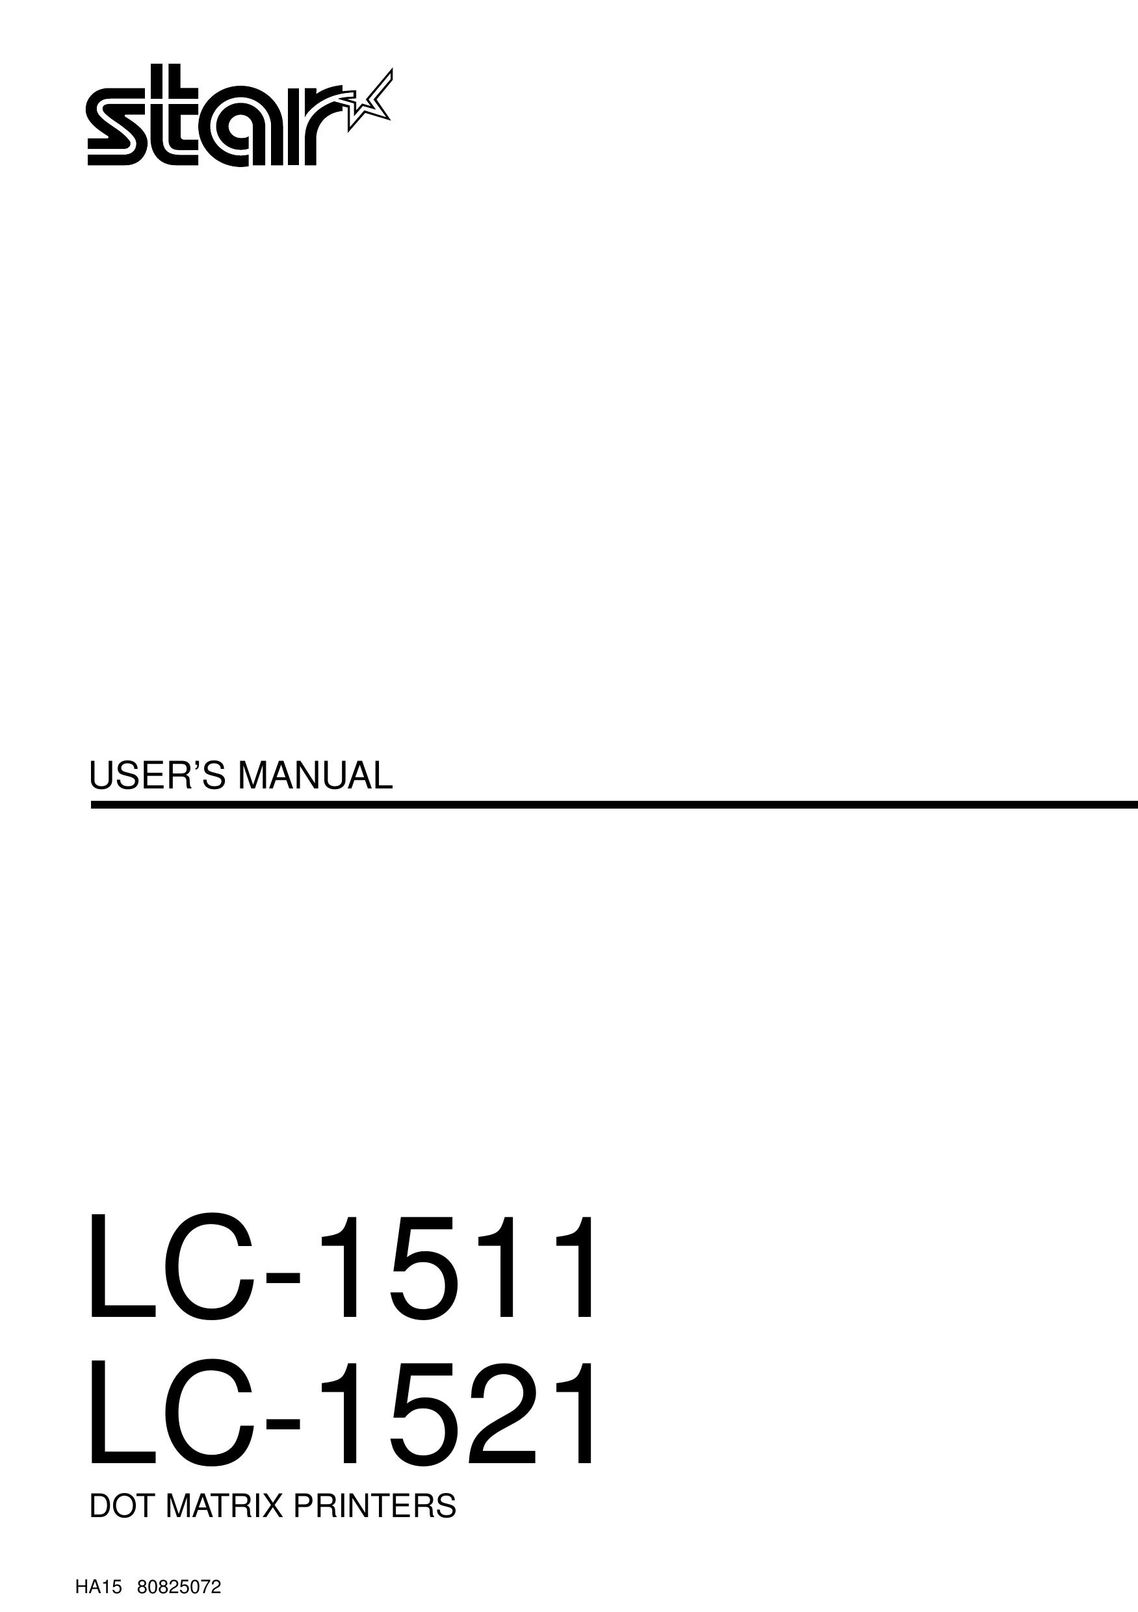 Star Micronics LC-1511 Printer User Manual